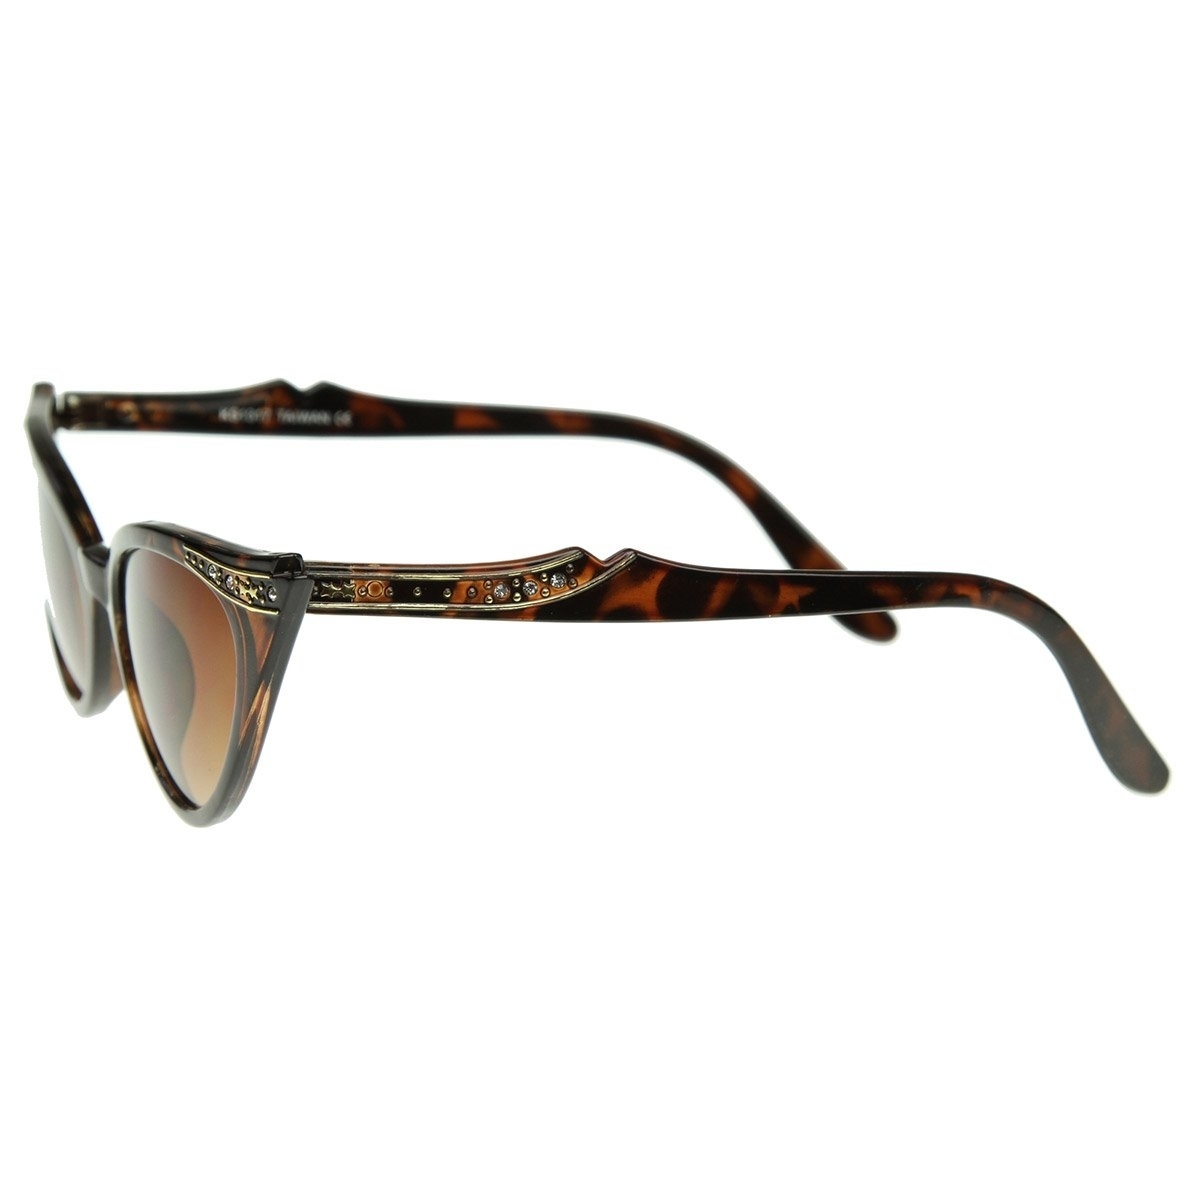 Vintage Inspired Mod Womens Fashion Rhinestone Cat Eye Sunglasses - Brown